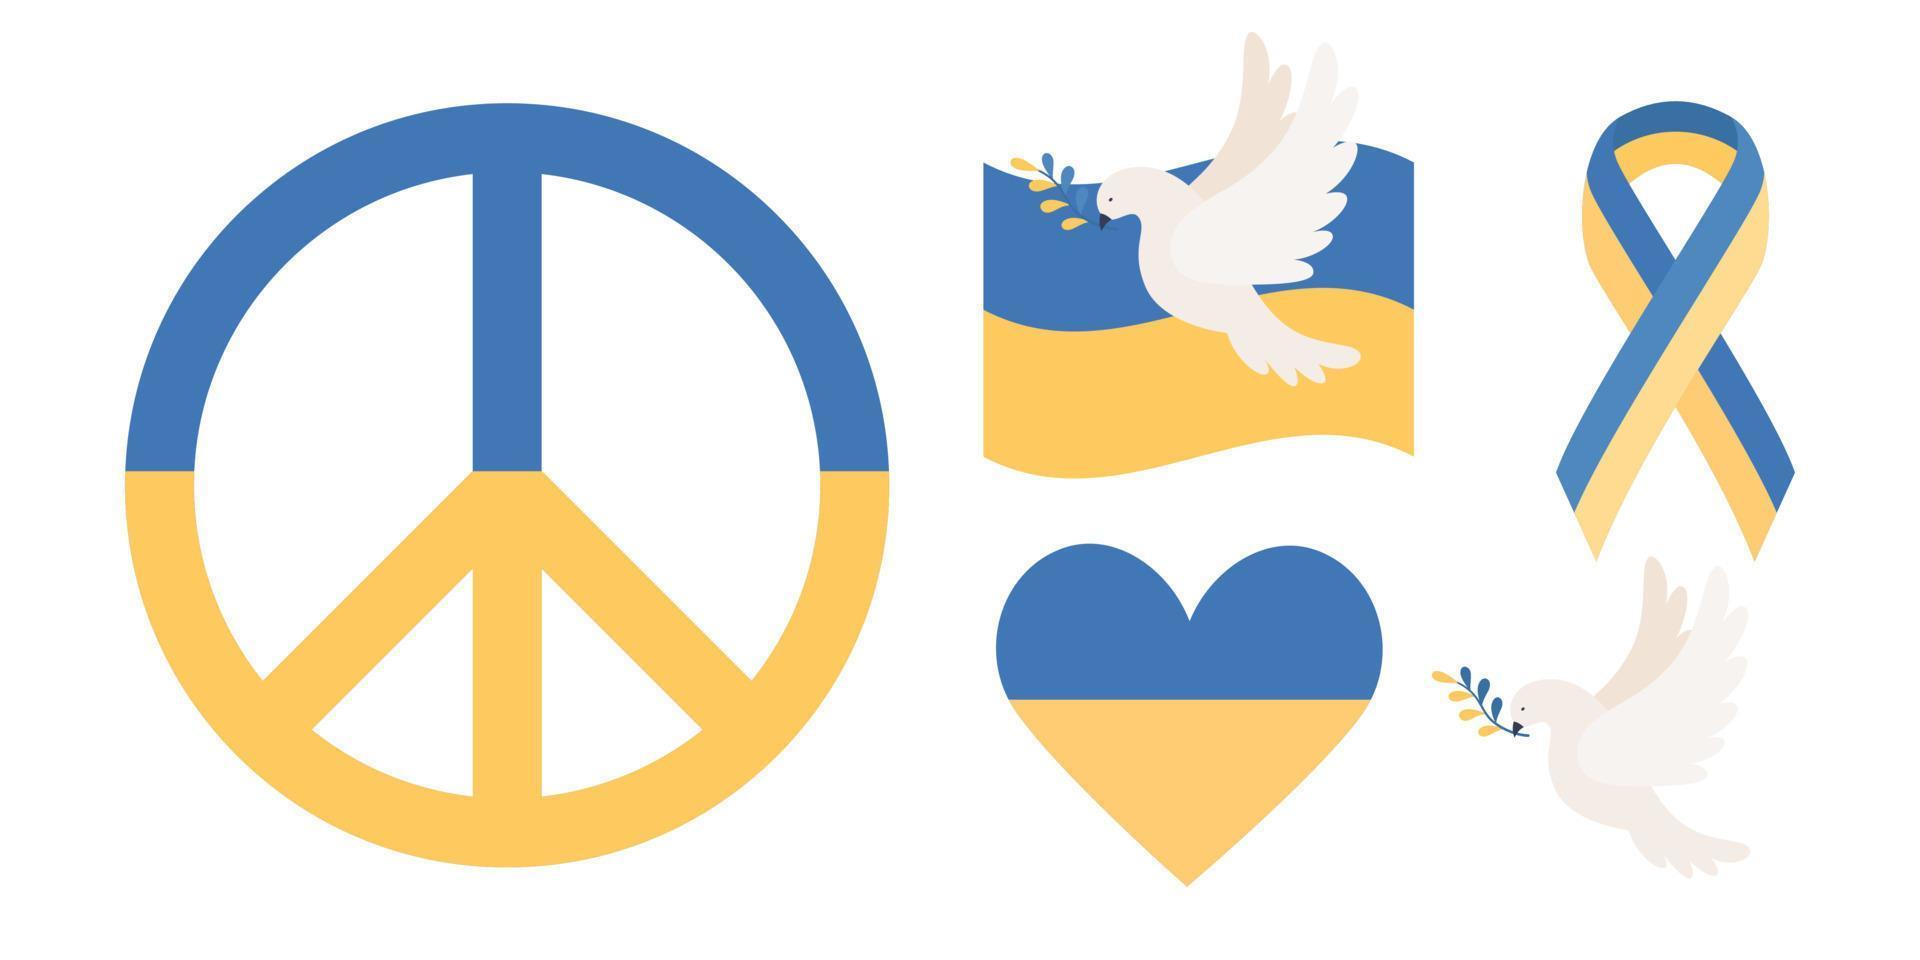 Ukraine peace symbols icon set. Ukrainian flag, dove with branch, heart, ribbon. Stay with Ukraine. Save Ukraine concept. Vector flat illustration